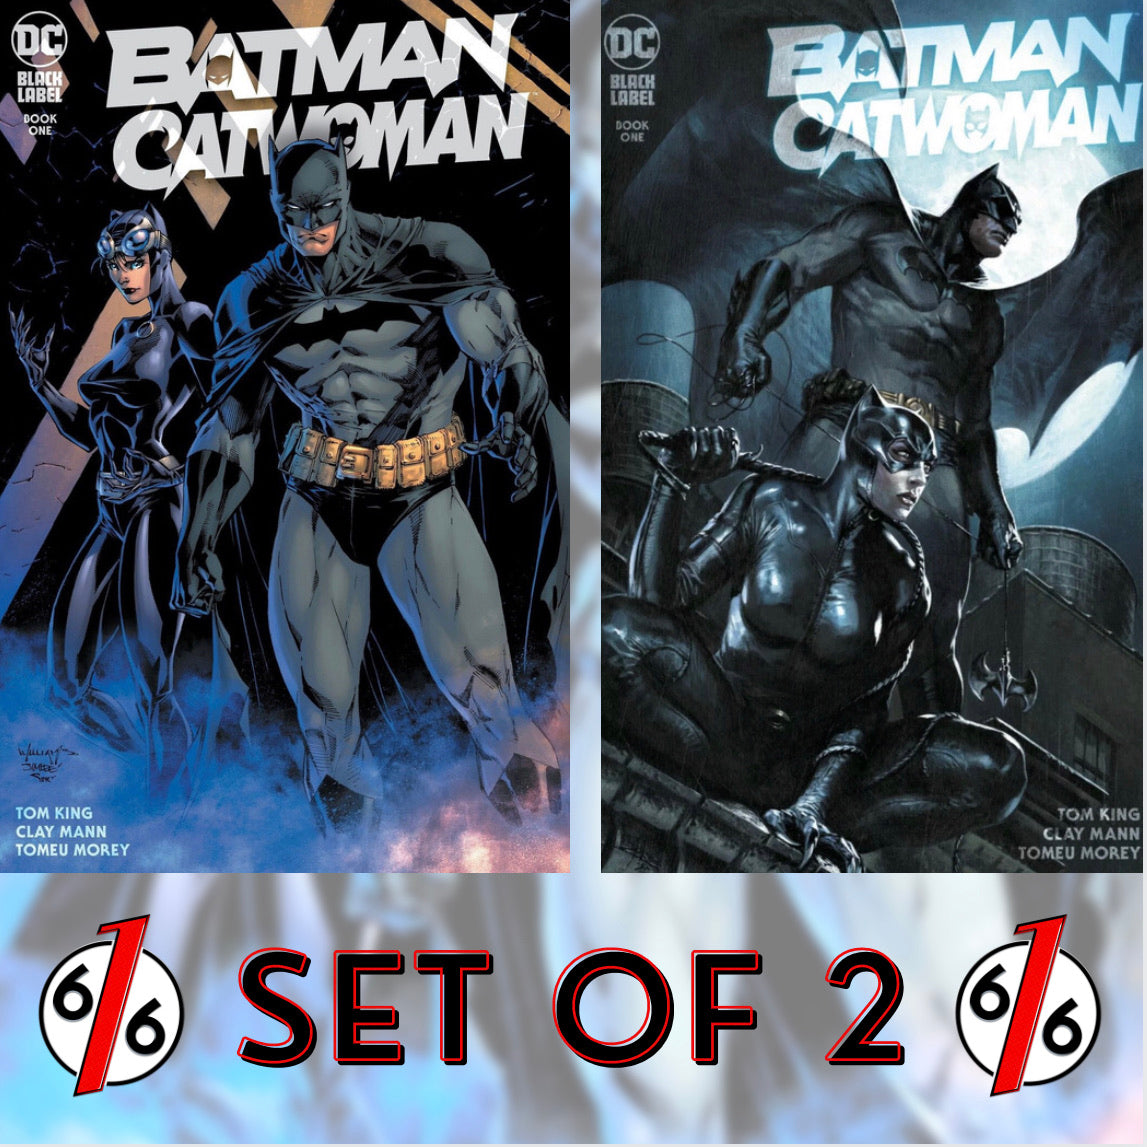 🚨🦇🔥 BATMAN CATWOMAN #1 SET OF 2 Variants Williams & Lee + Dell’Otto LTD 3000